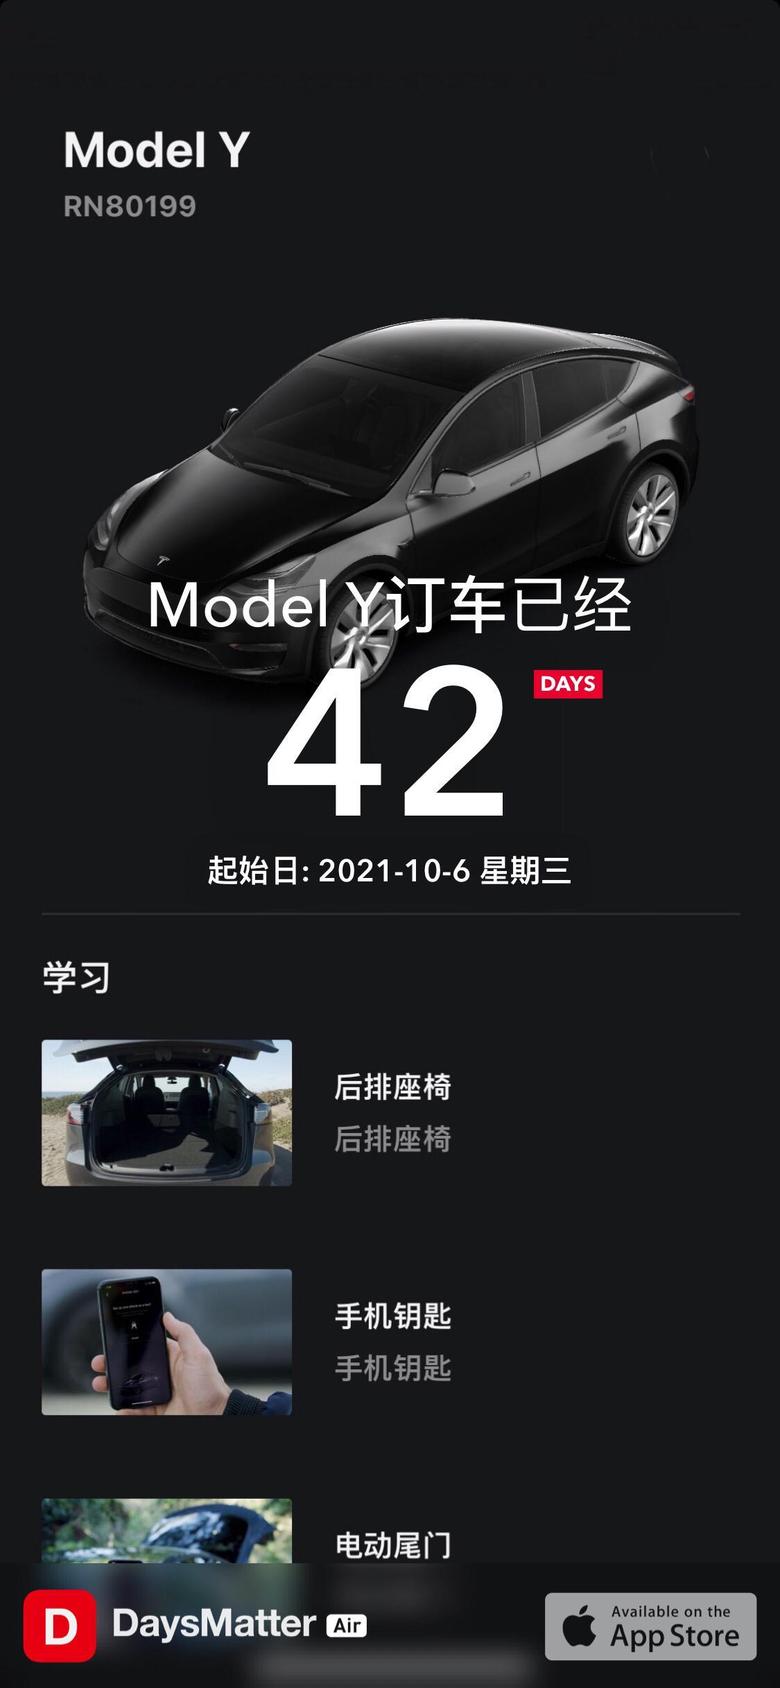 model y 南京目前19寸单号193已变态，按照4天一个号，我还有24天，目前等车42天，算起来2个多月，看来19寸都要靠近70天！